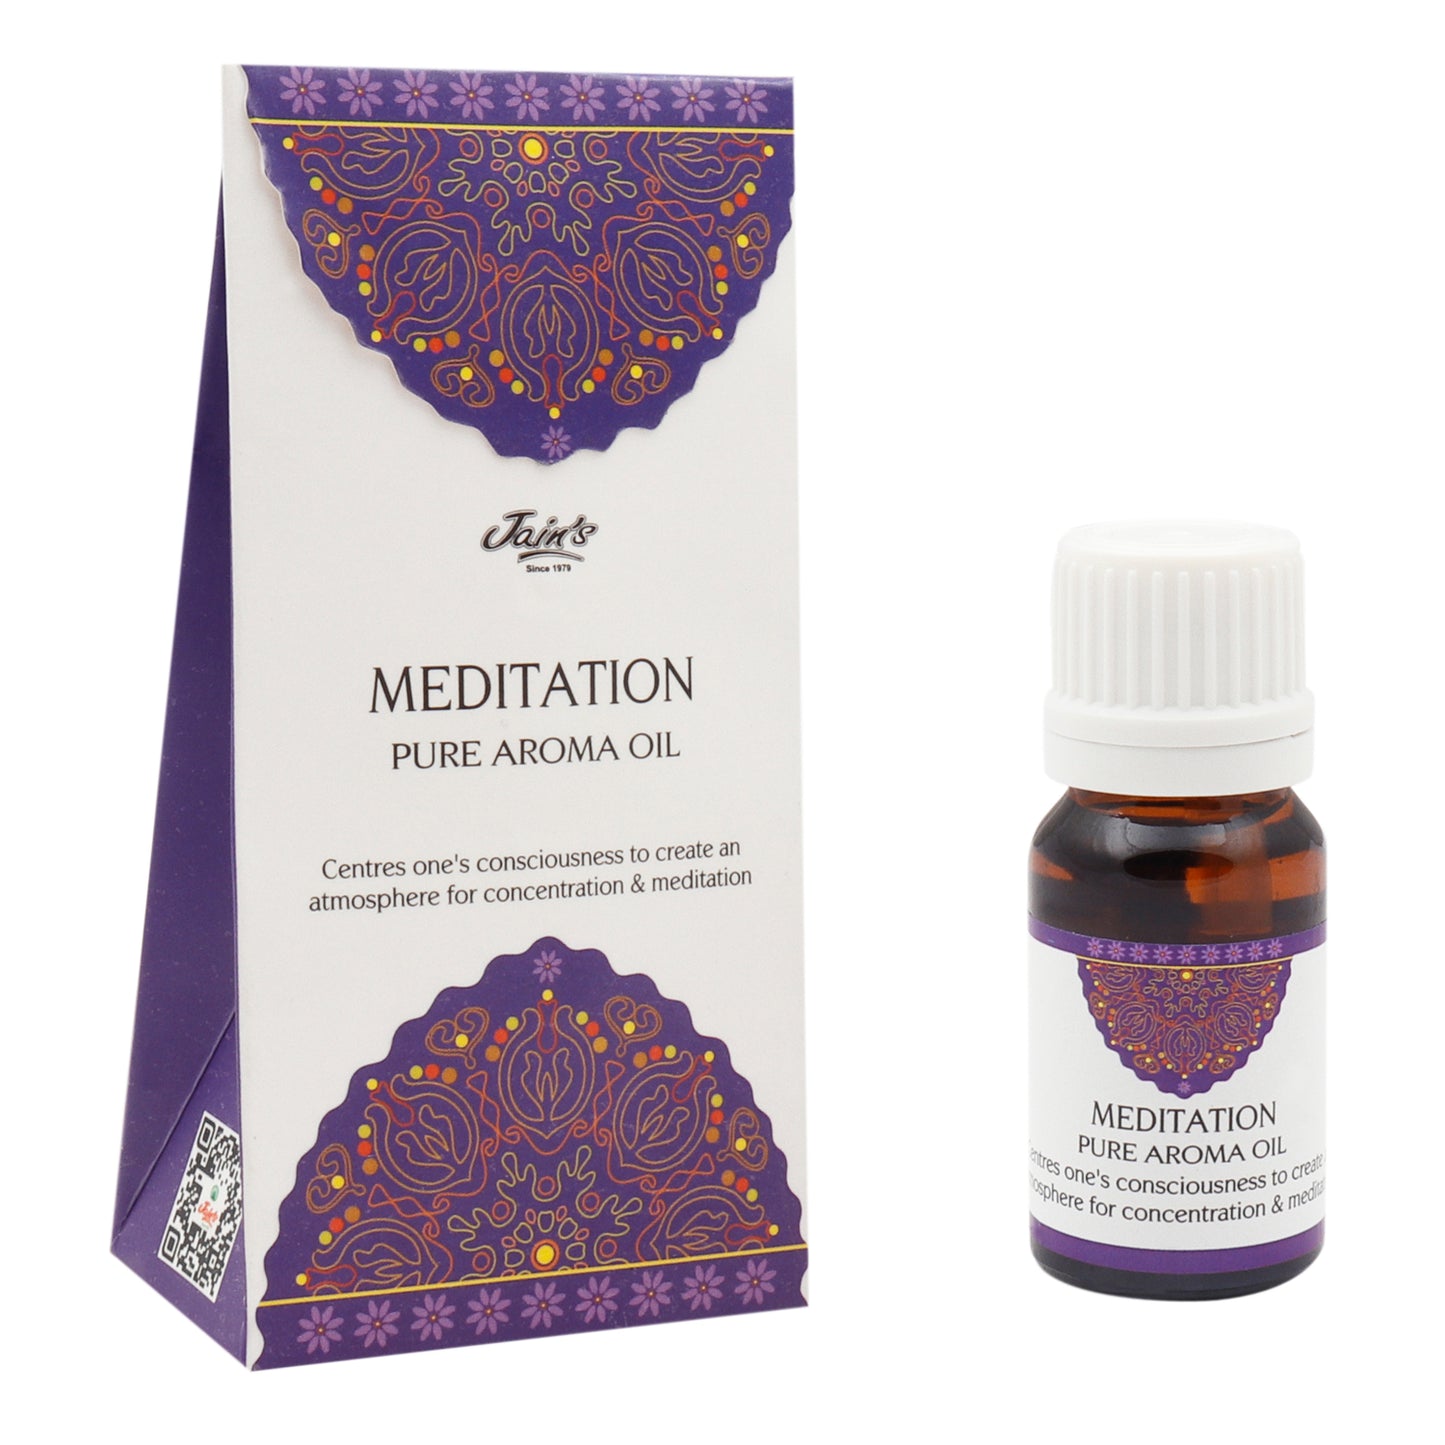 Meditation Aroma Oil / Diffuser Oil